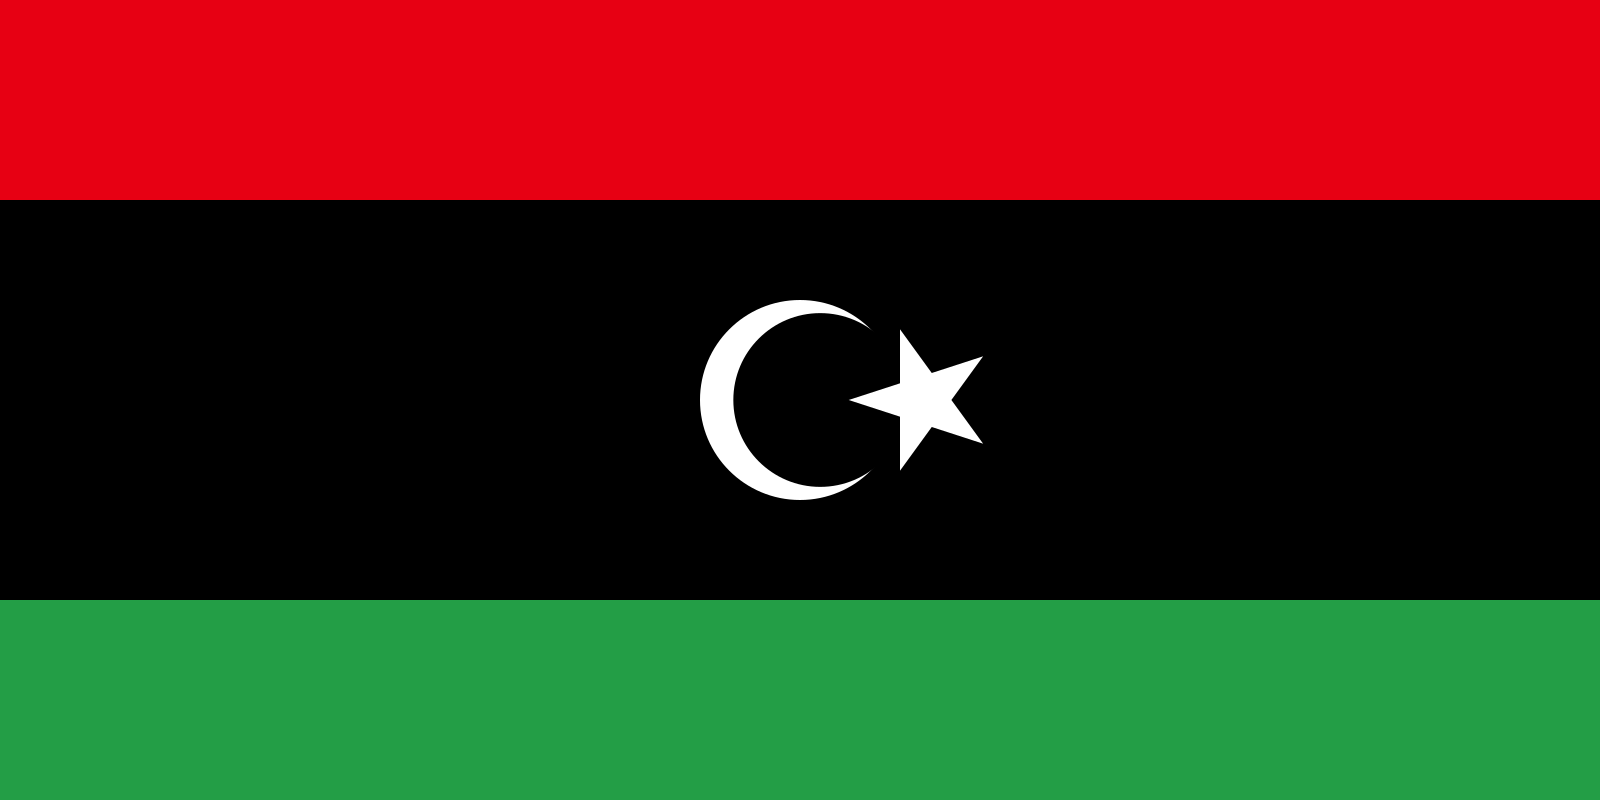 Quốc kỳ của Libya